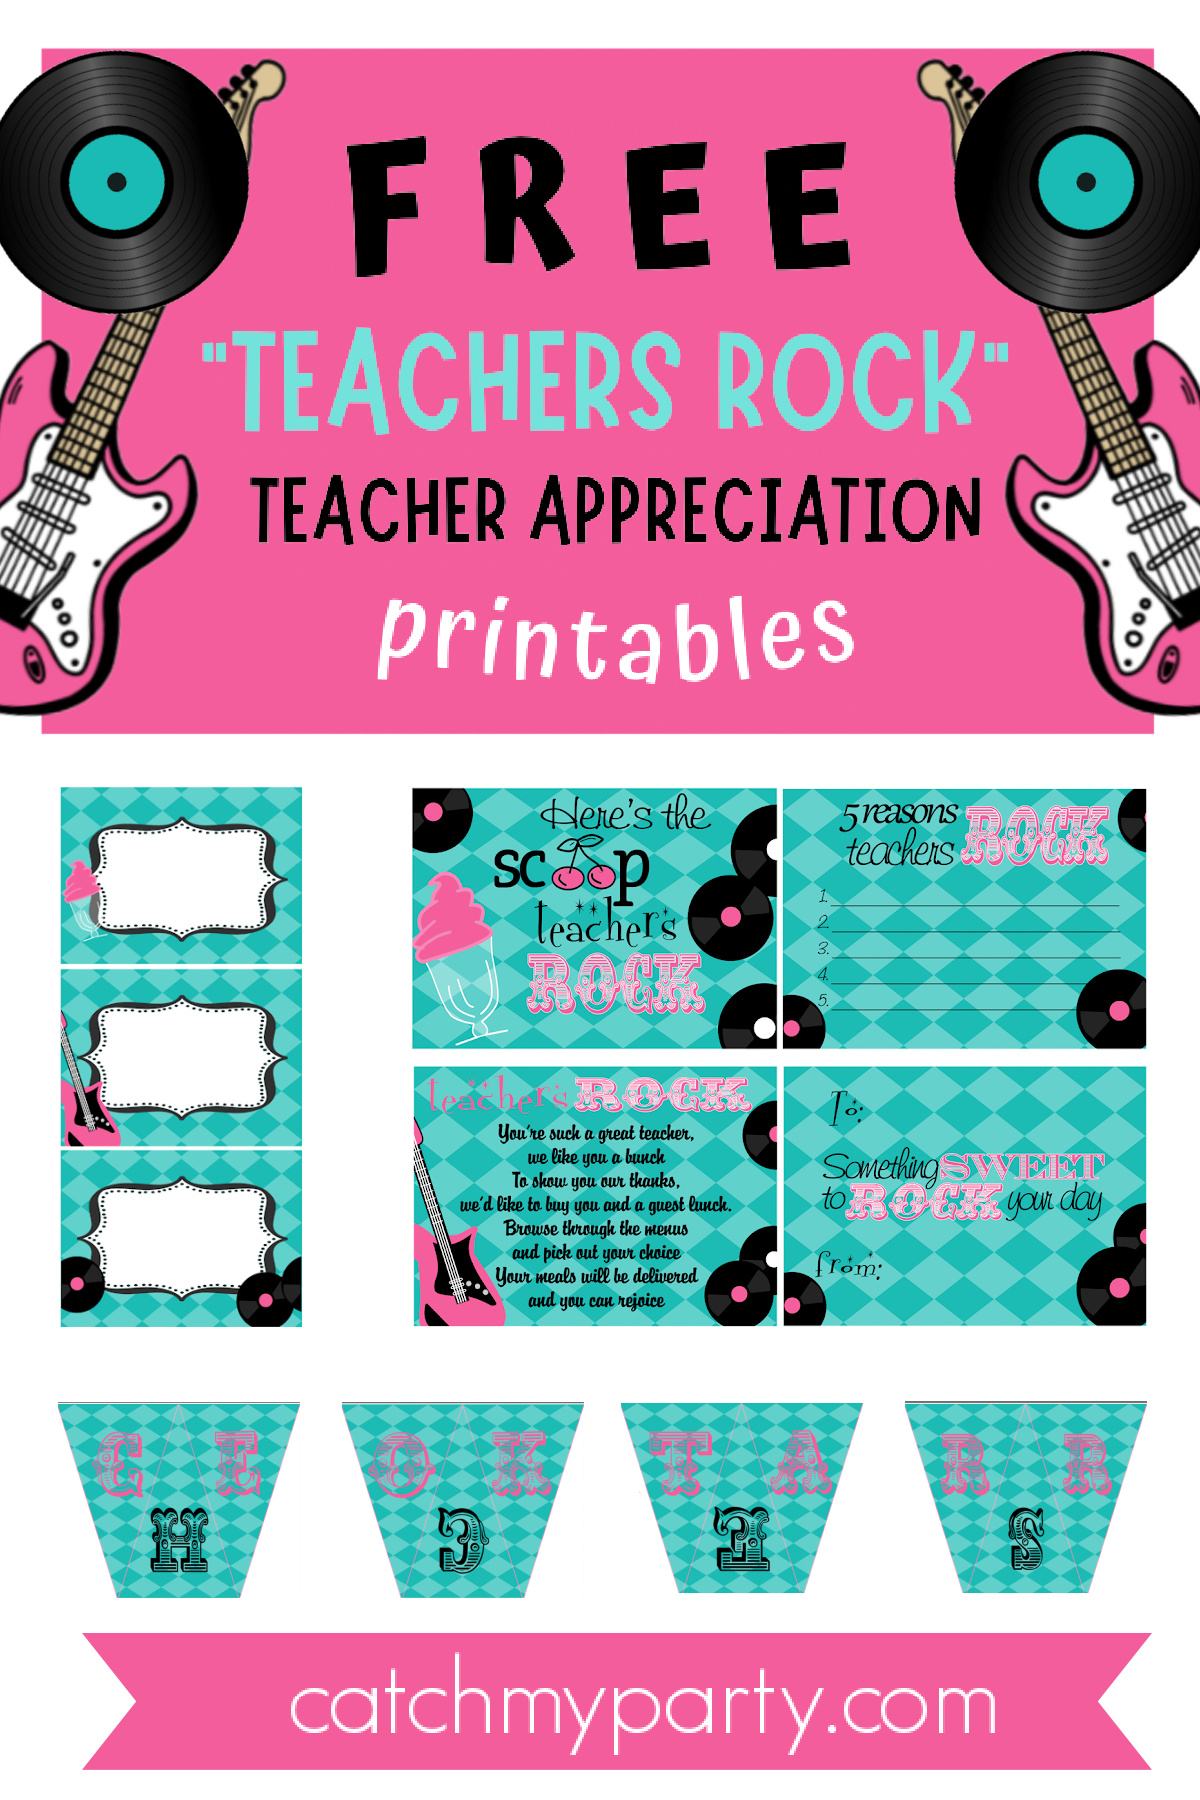 FREE "Teachers Rock" Teacher Appreciation Printables